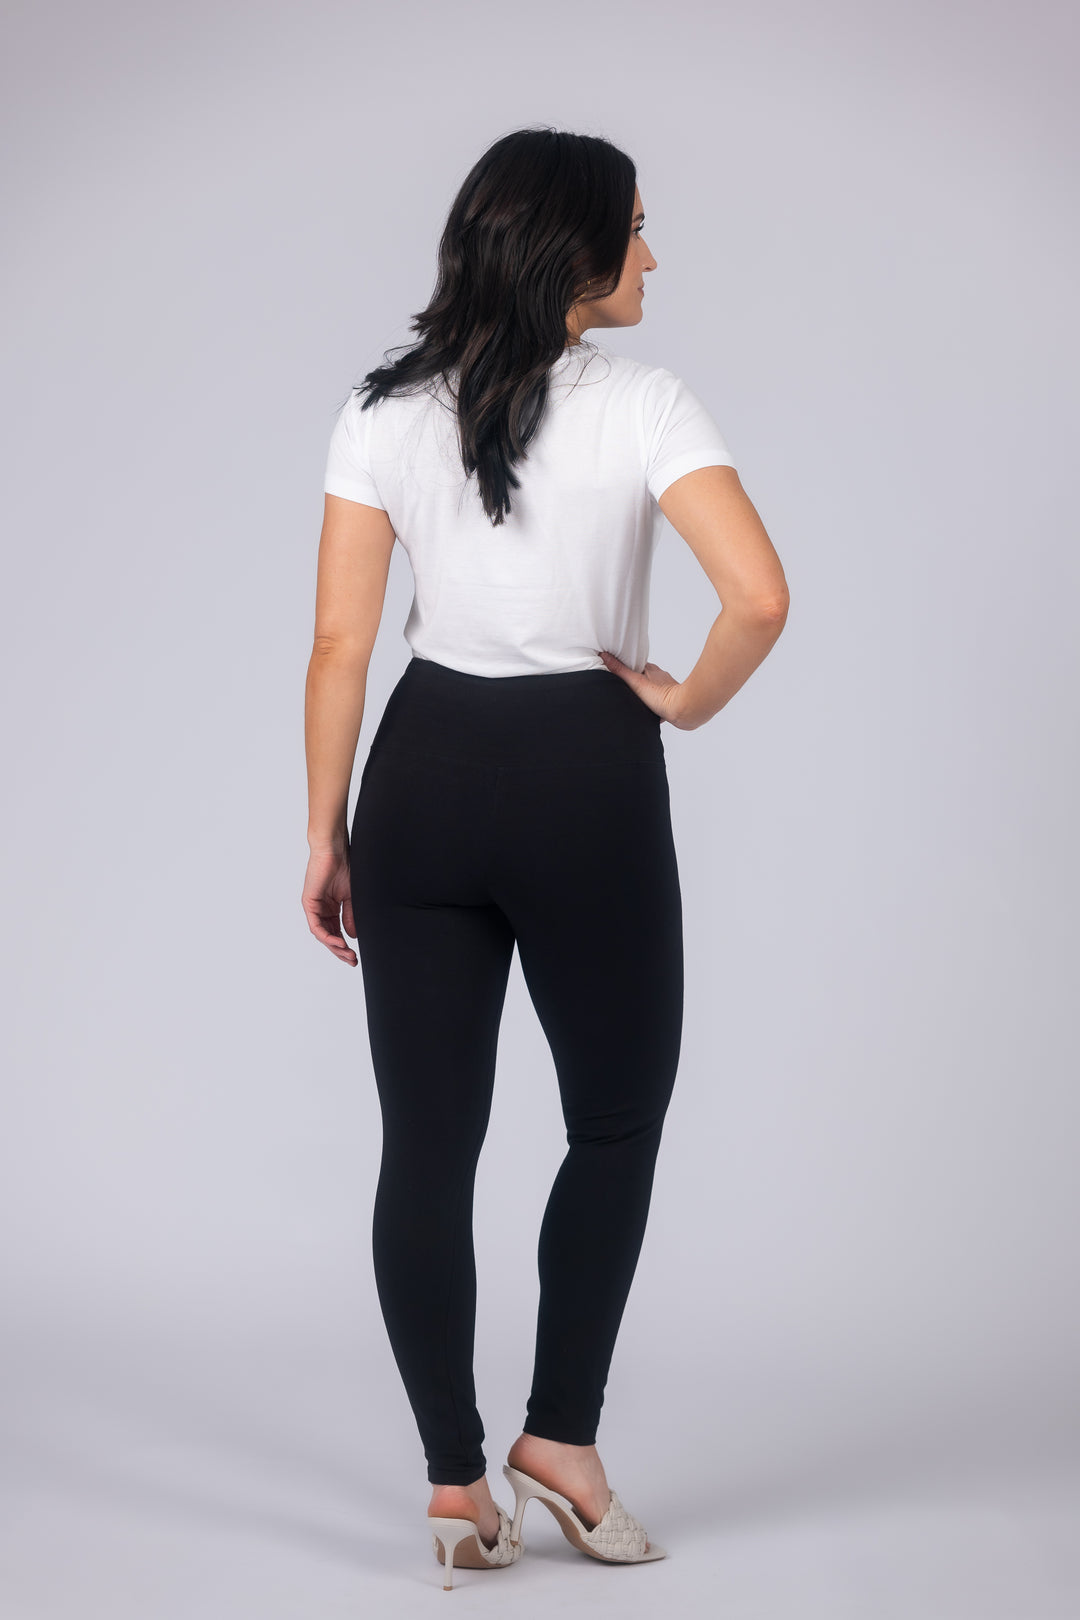 Assets by Spanx Women's Black Ponte Full Length Shaping Leggings Small